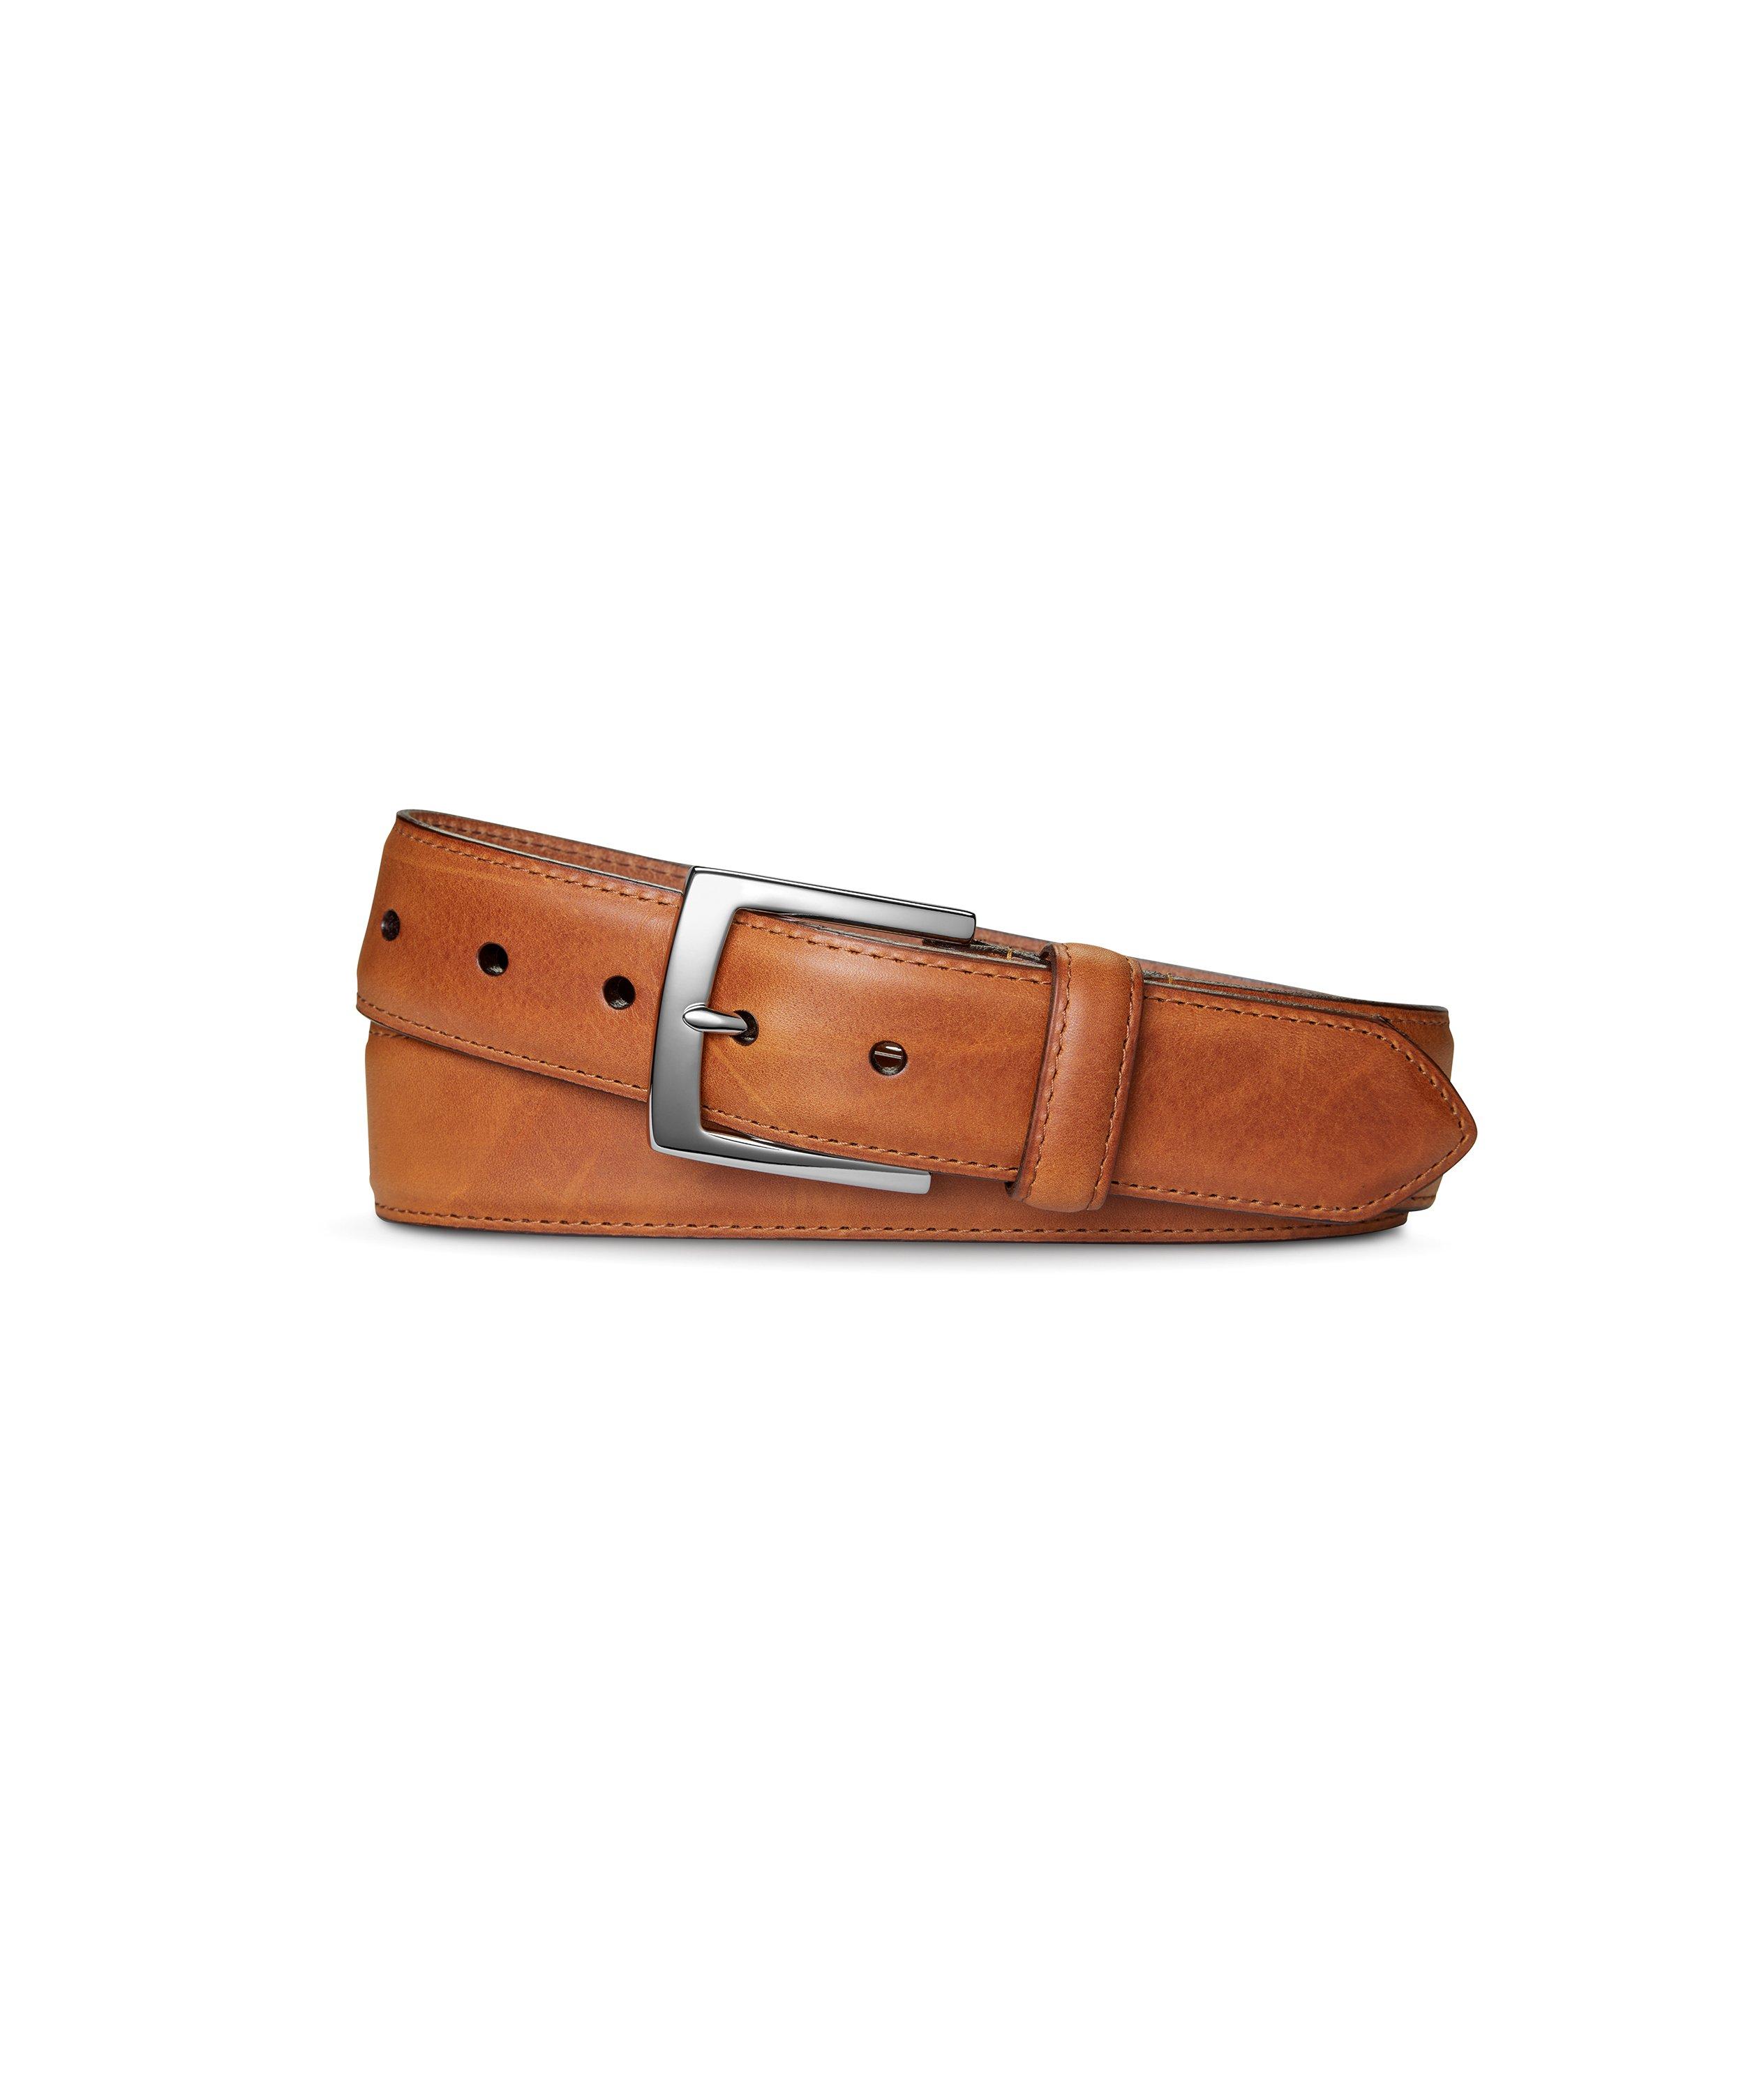 Harry Rosen Bedrock Leather Belt. 1